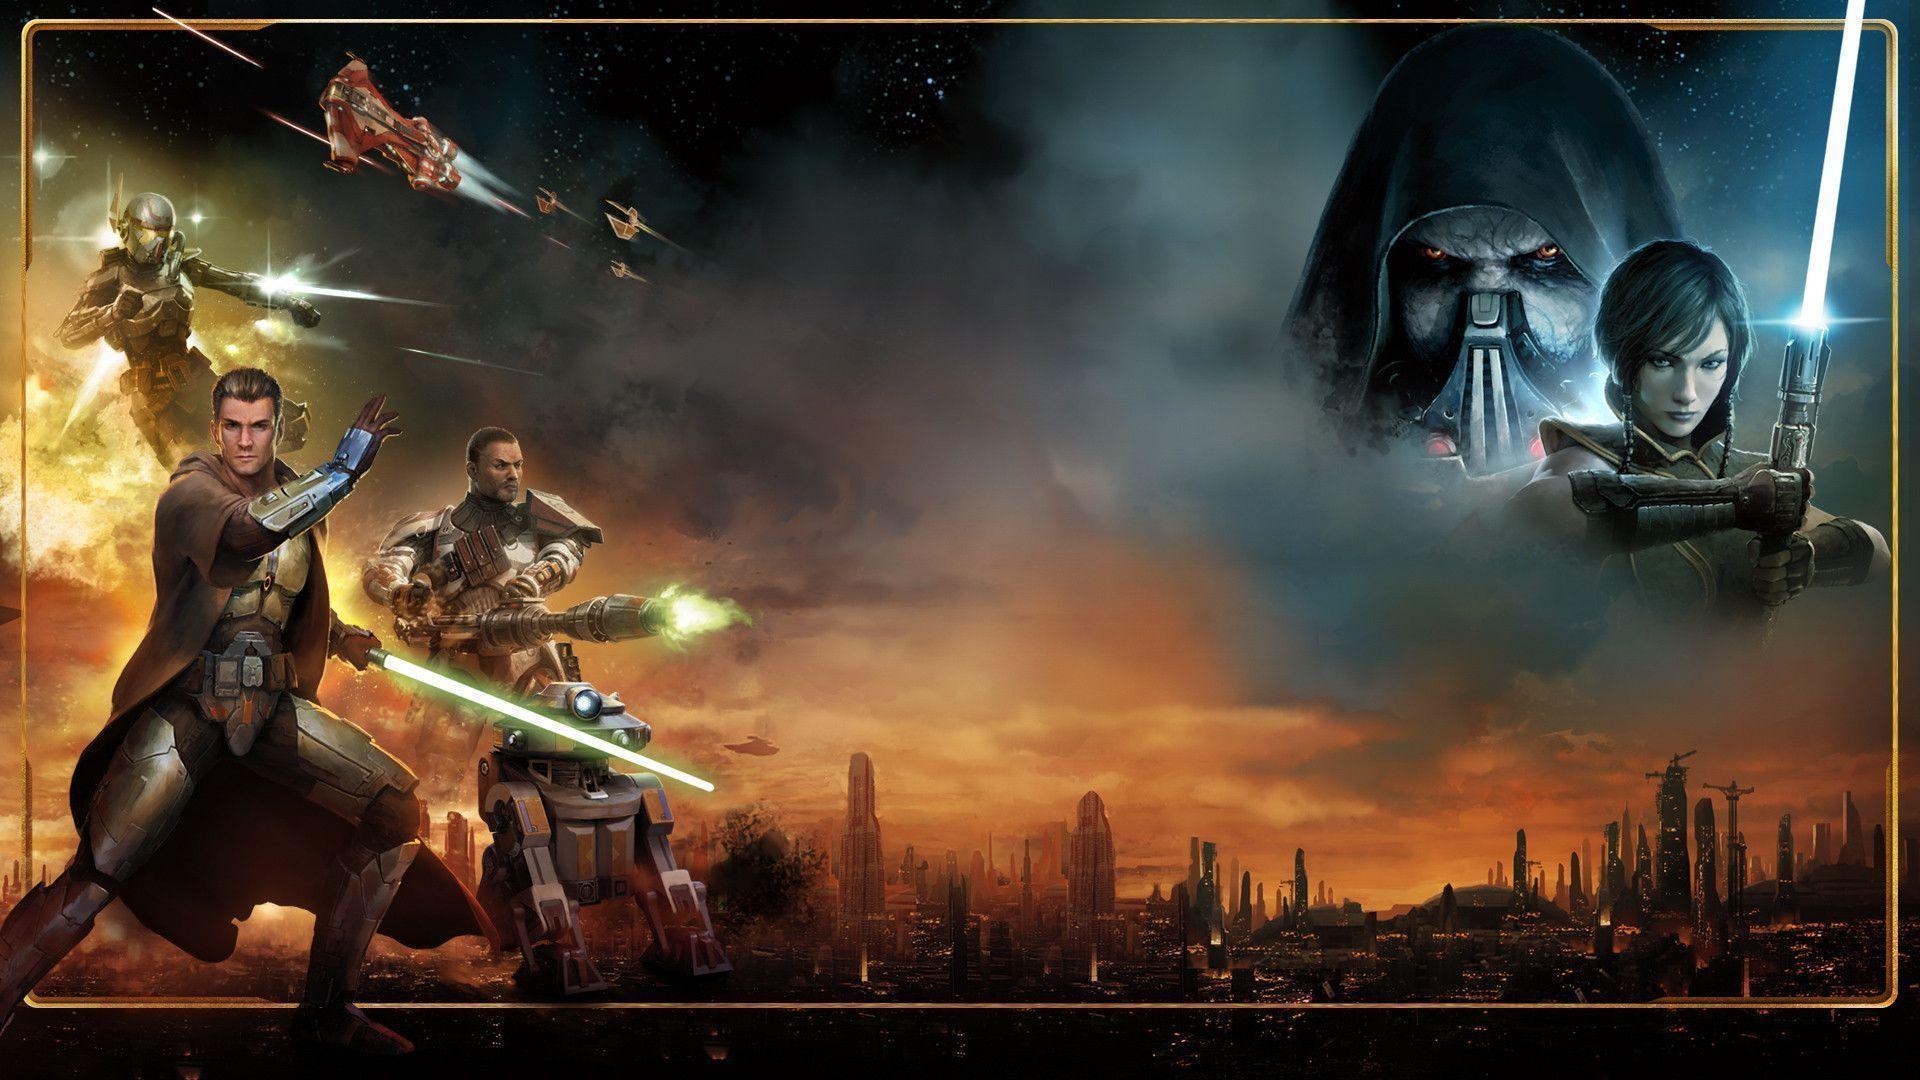 Star Wars The Old Republic Wallpaper